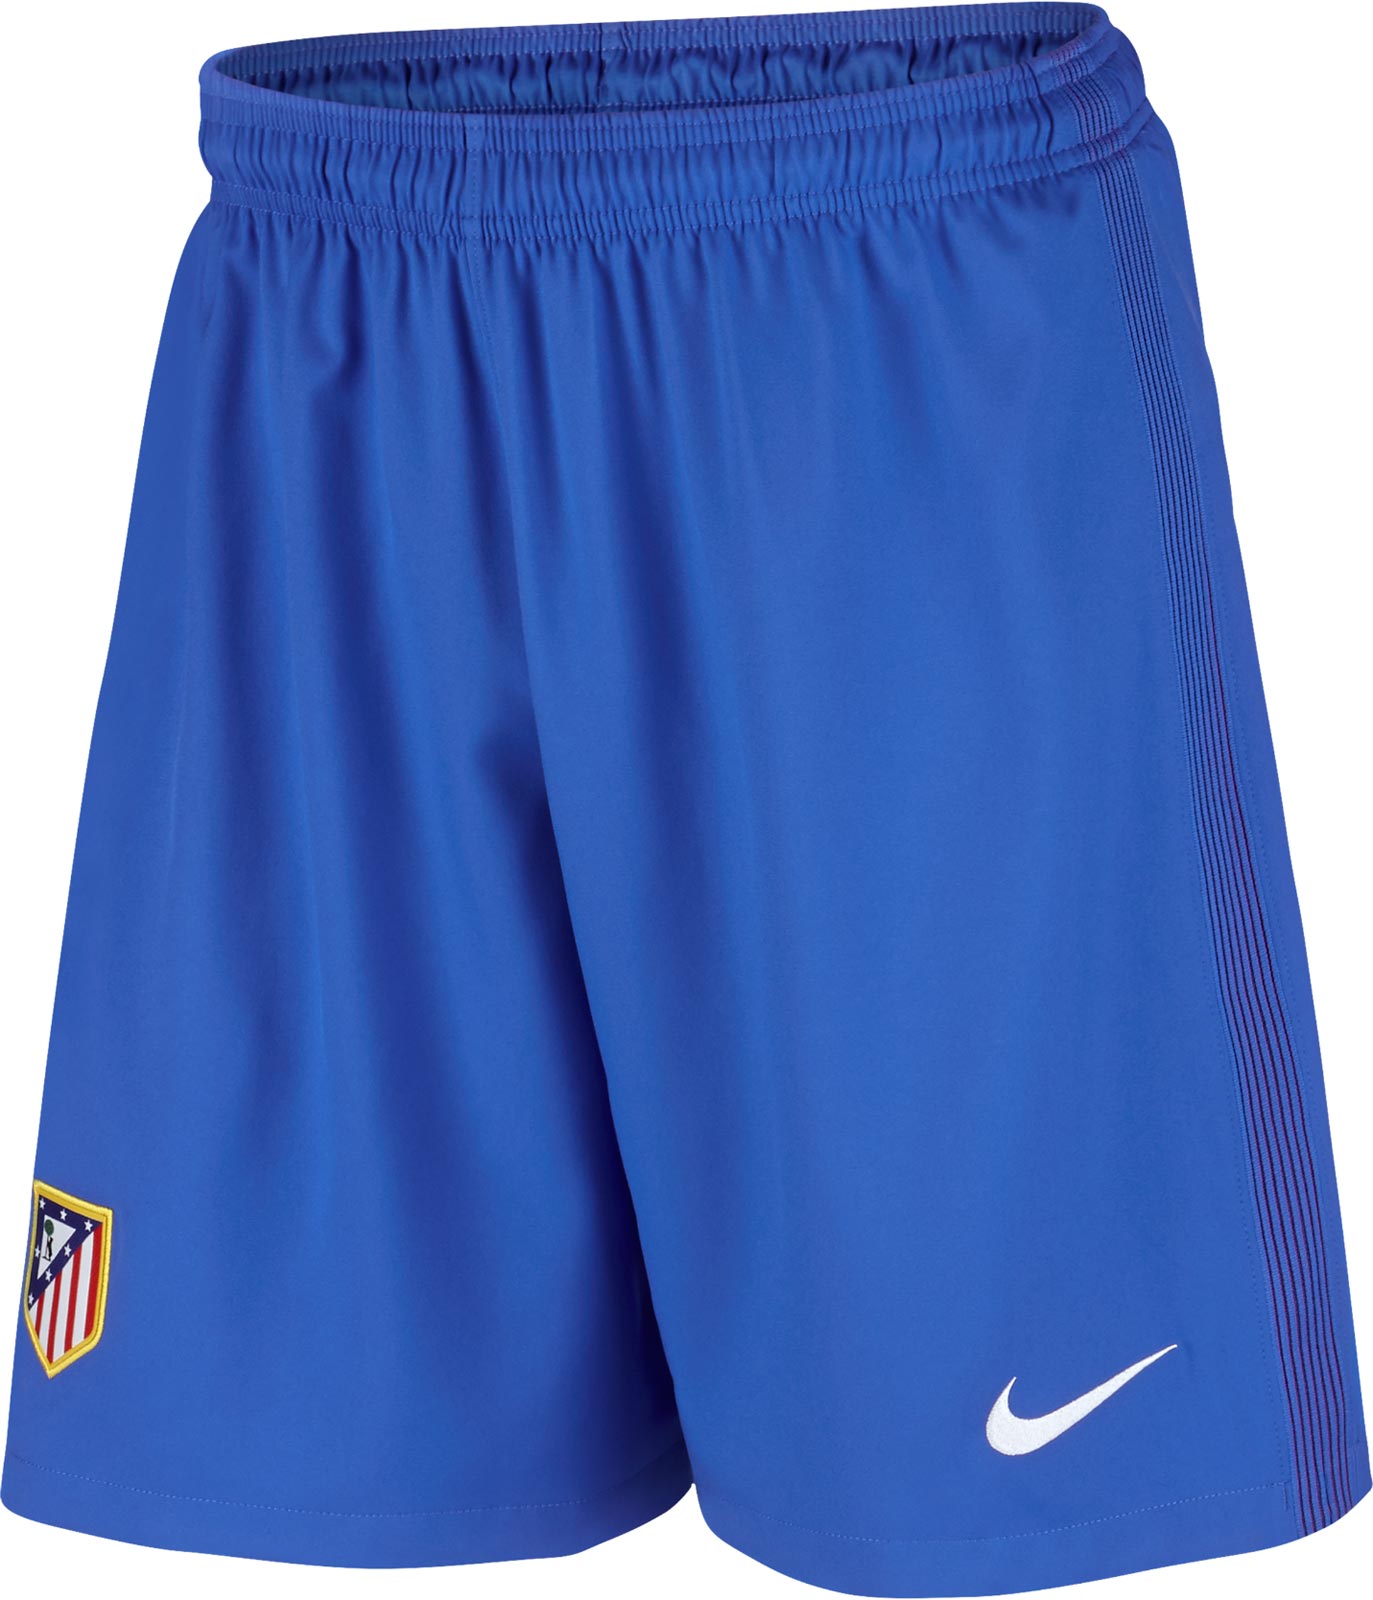 atletico-16-17-home-kit-shorts